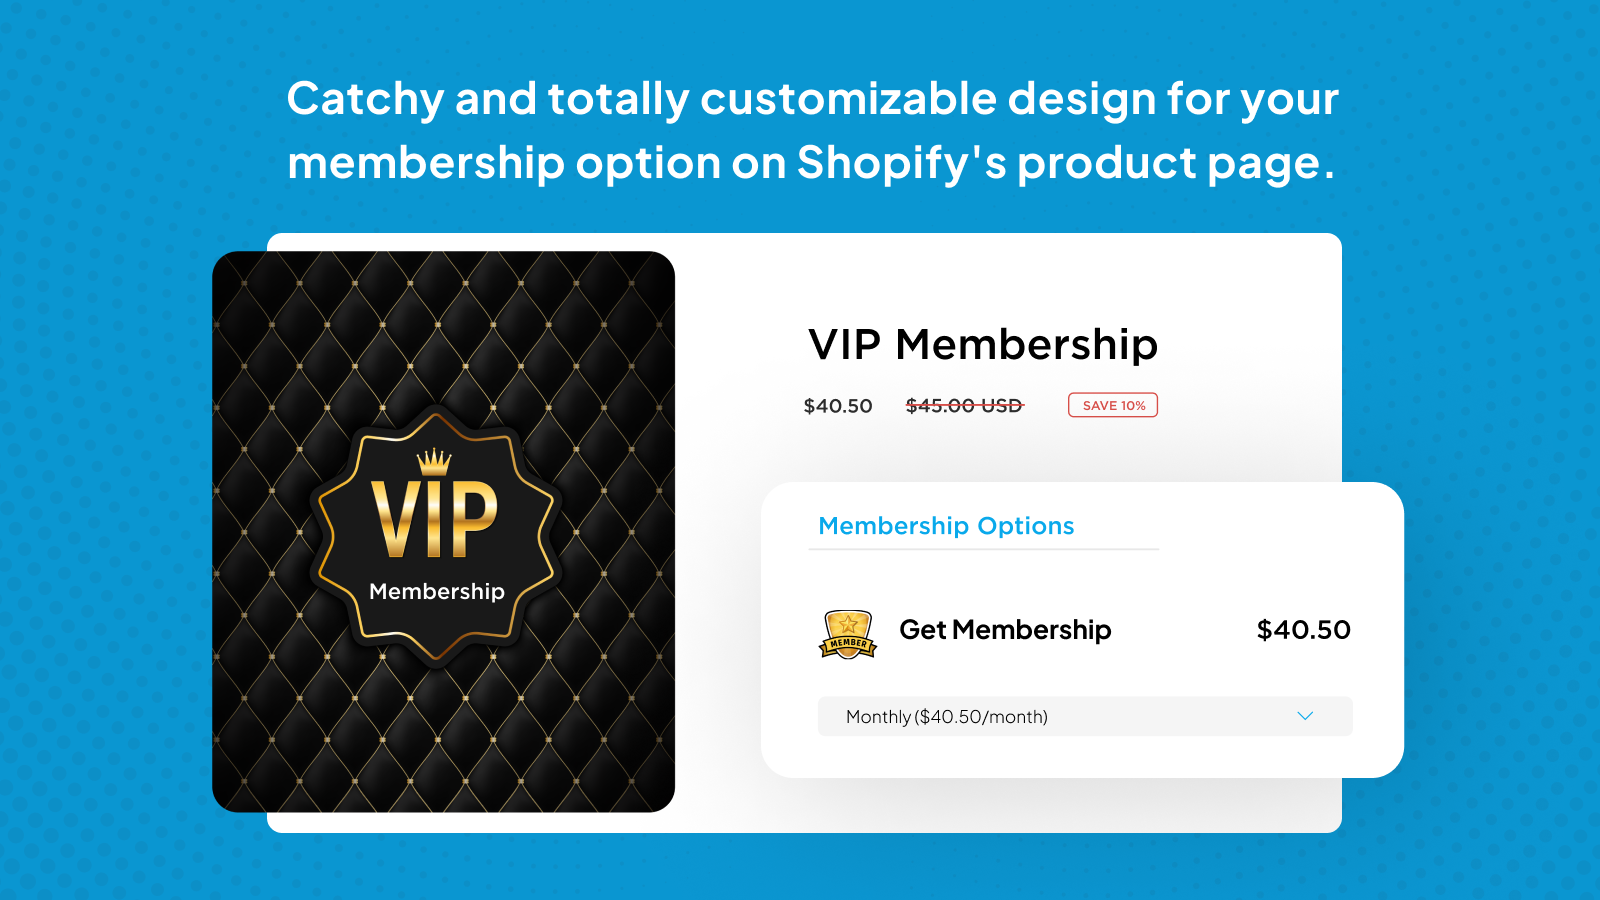 Customizable designs for membership options.